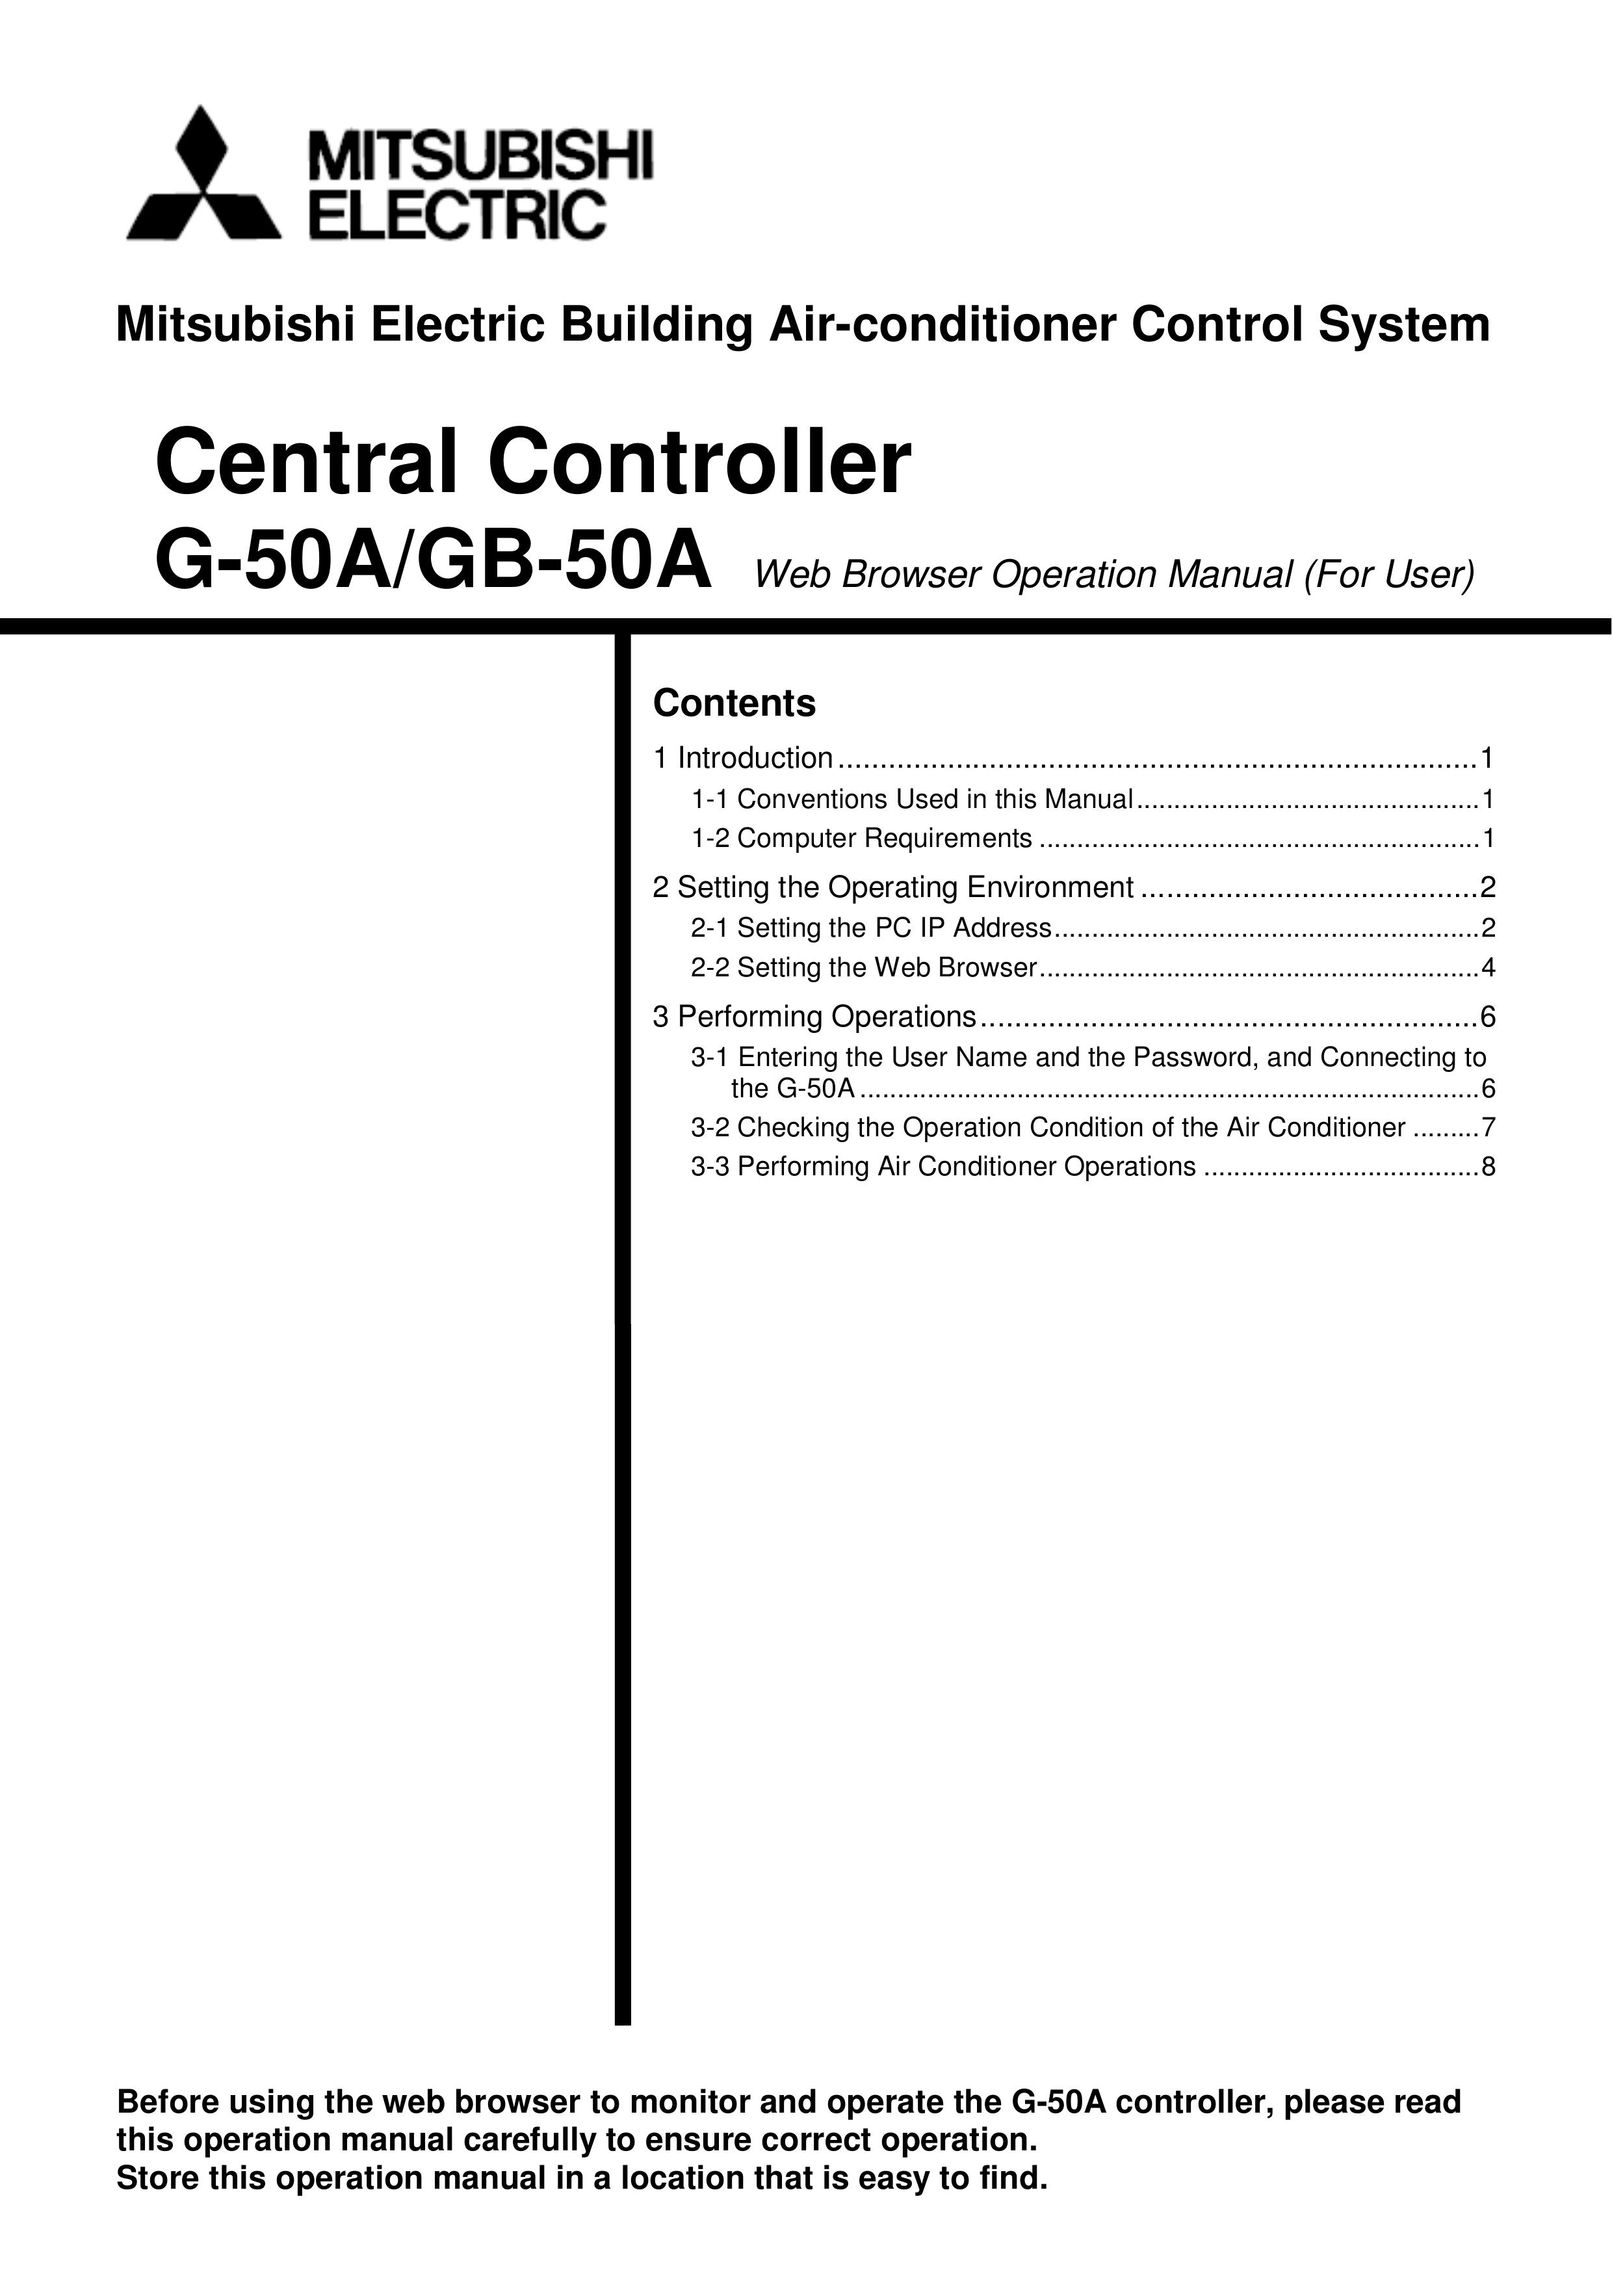 Mitsubishi Electronics G-50A/GB-50A Air Conditioner User Manual